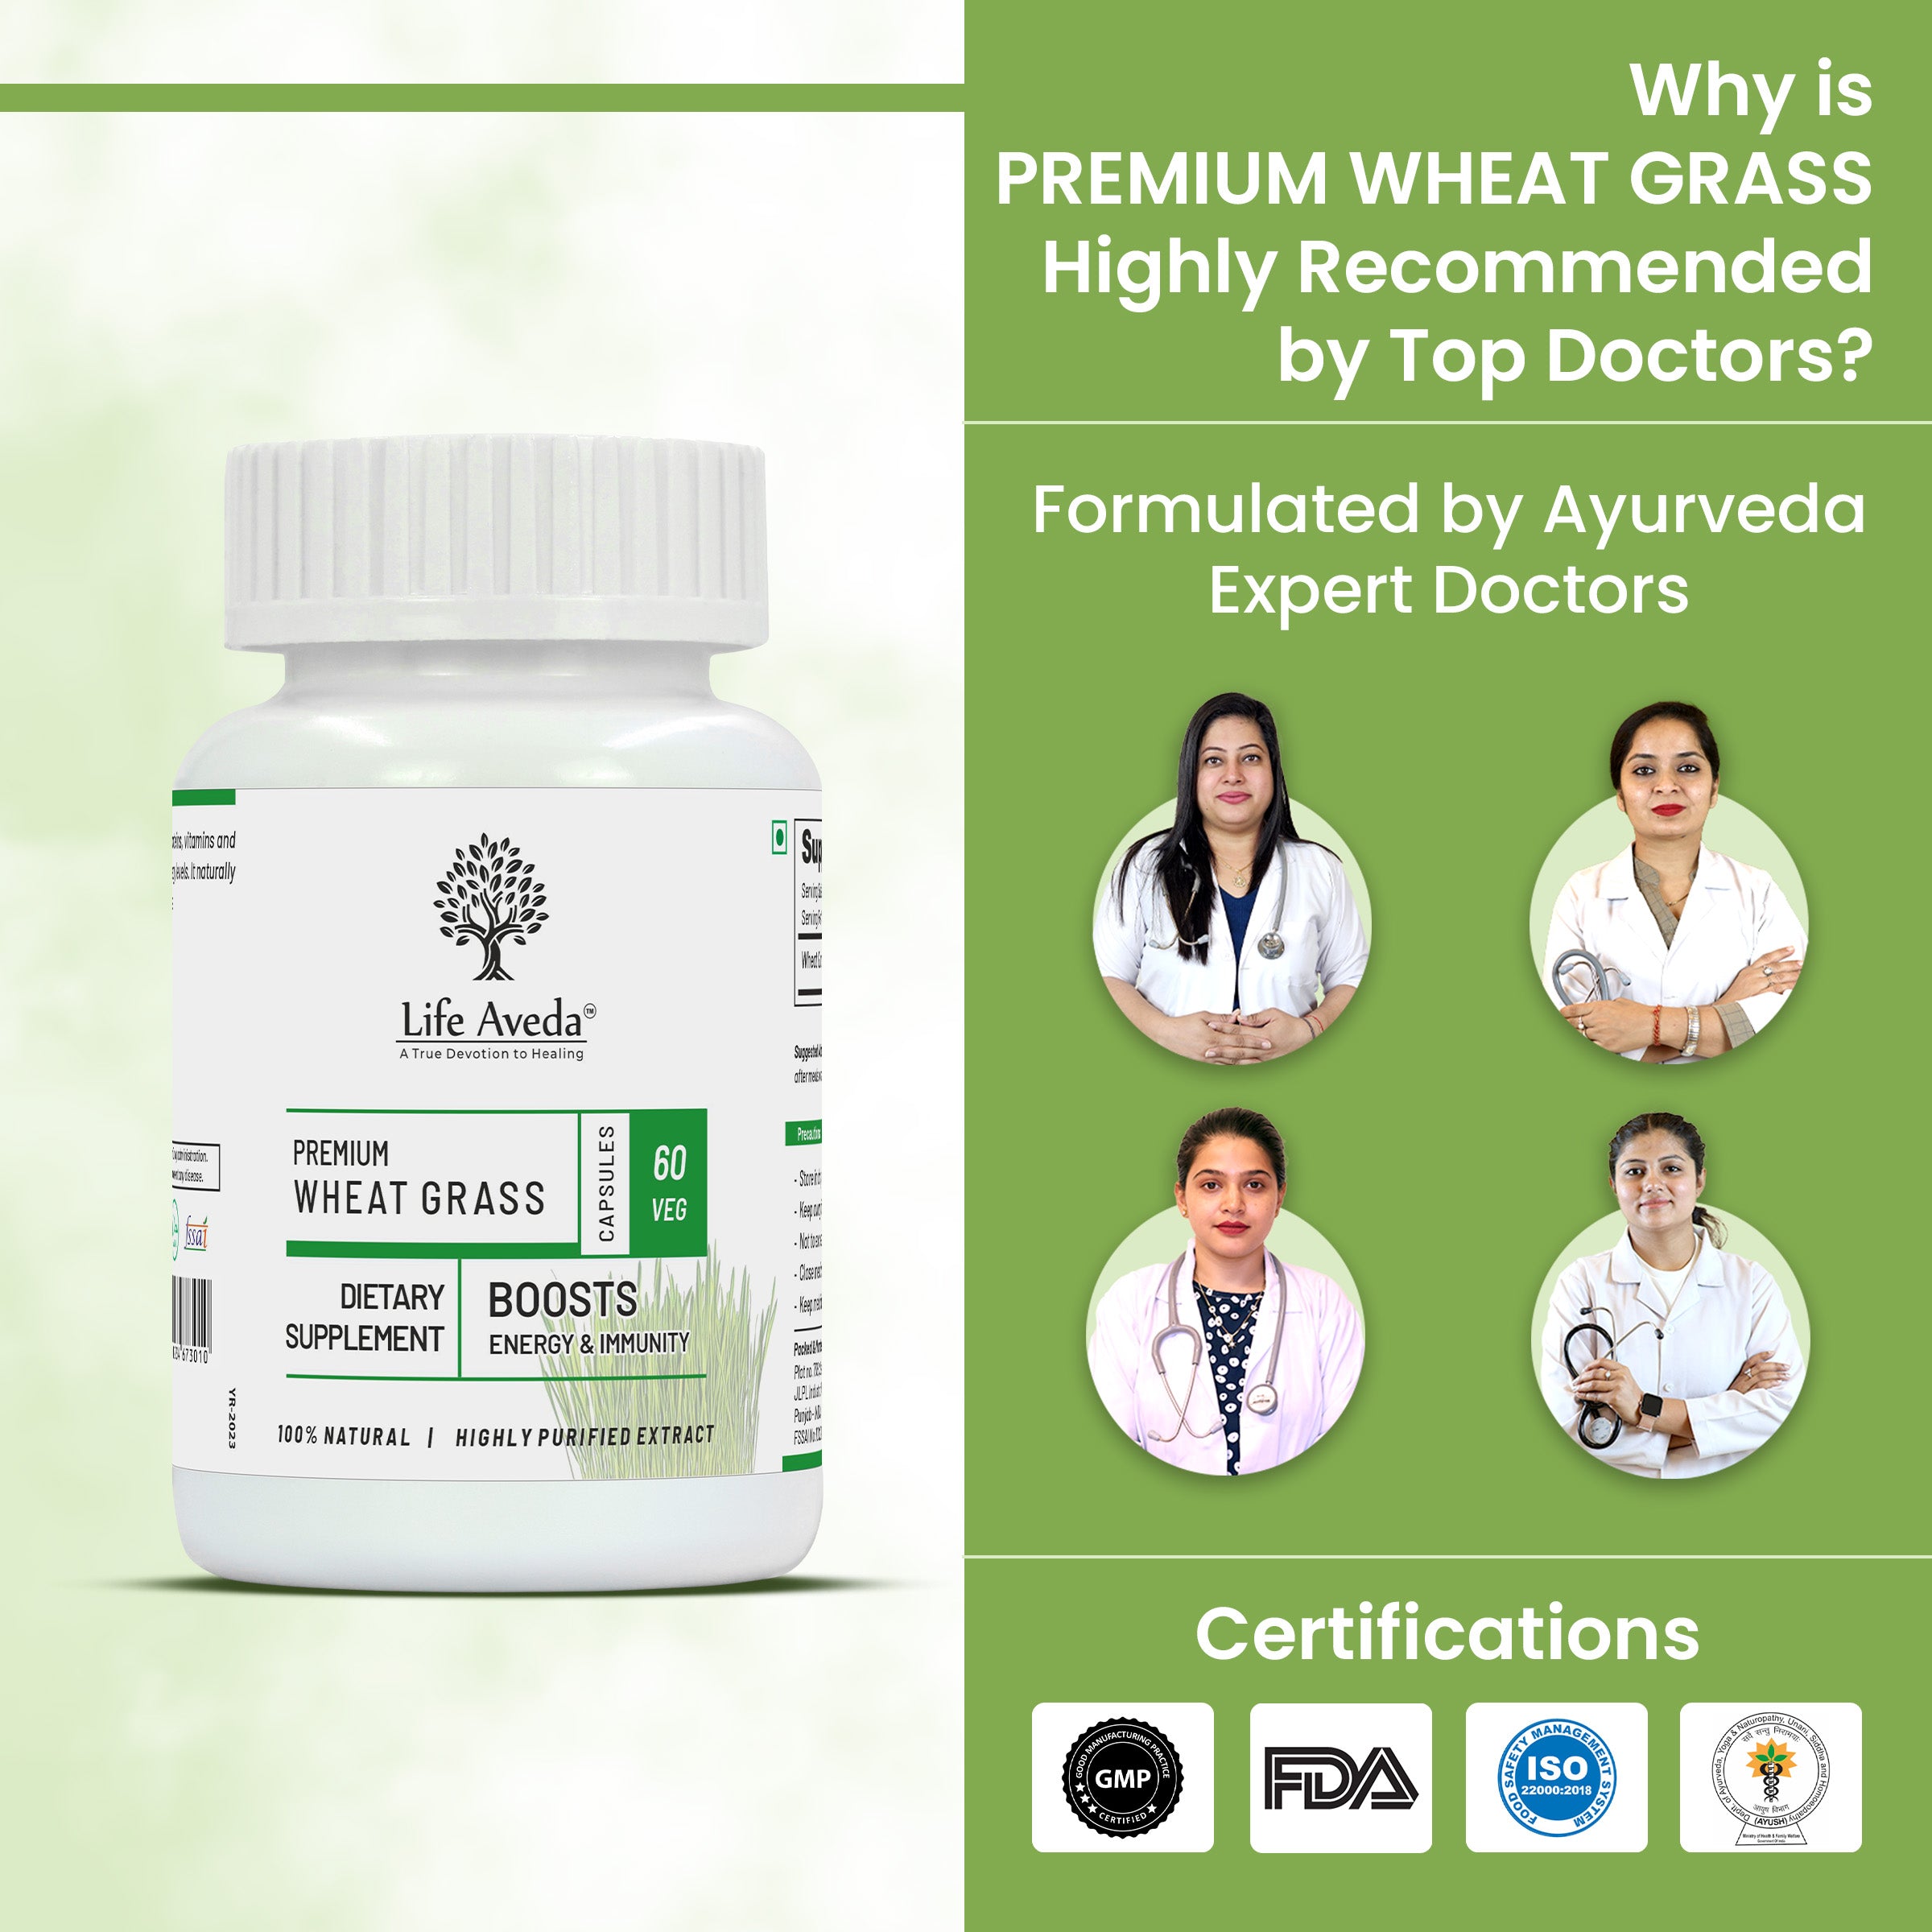 Life Aveda Premium Wheat Grass Doctors Certifications